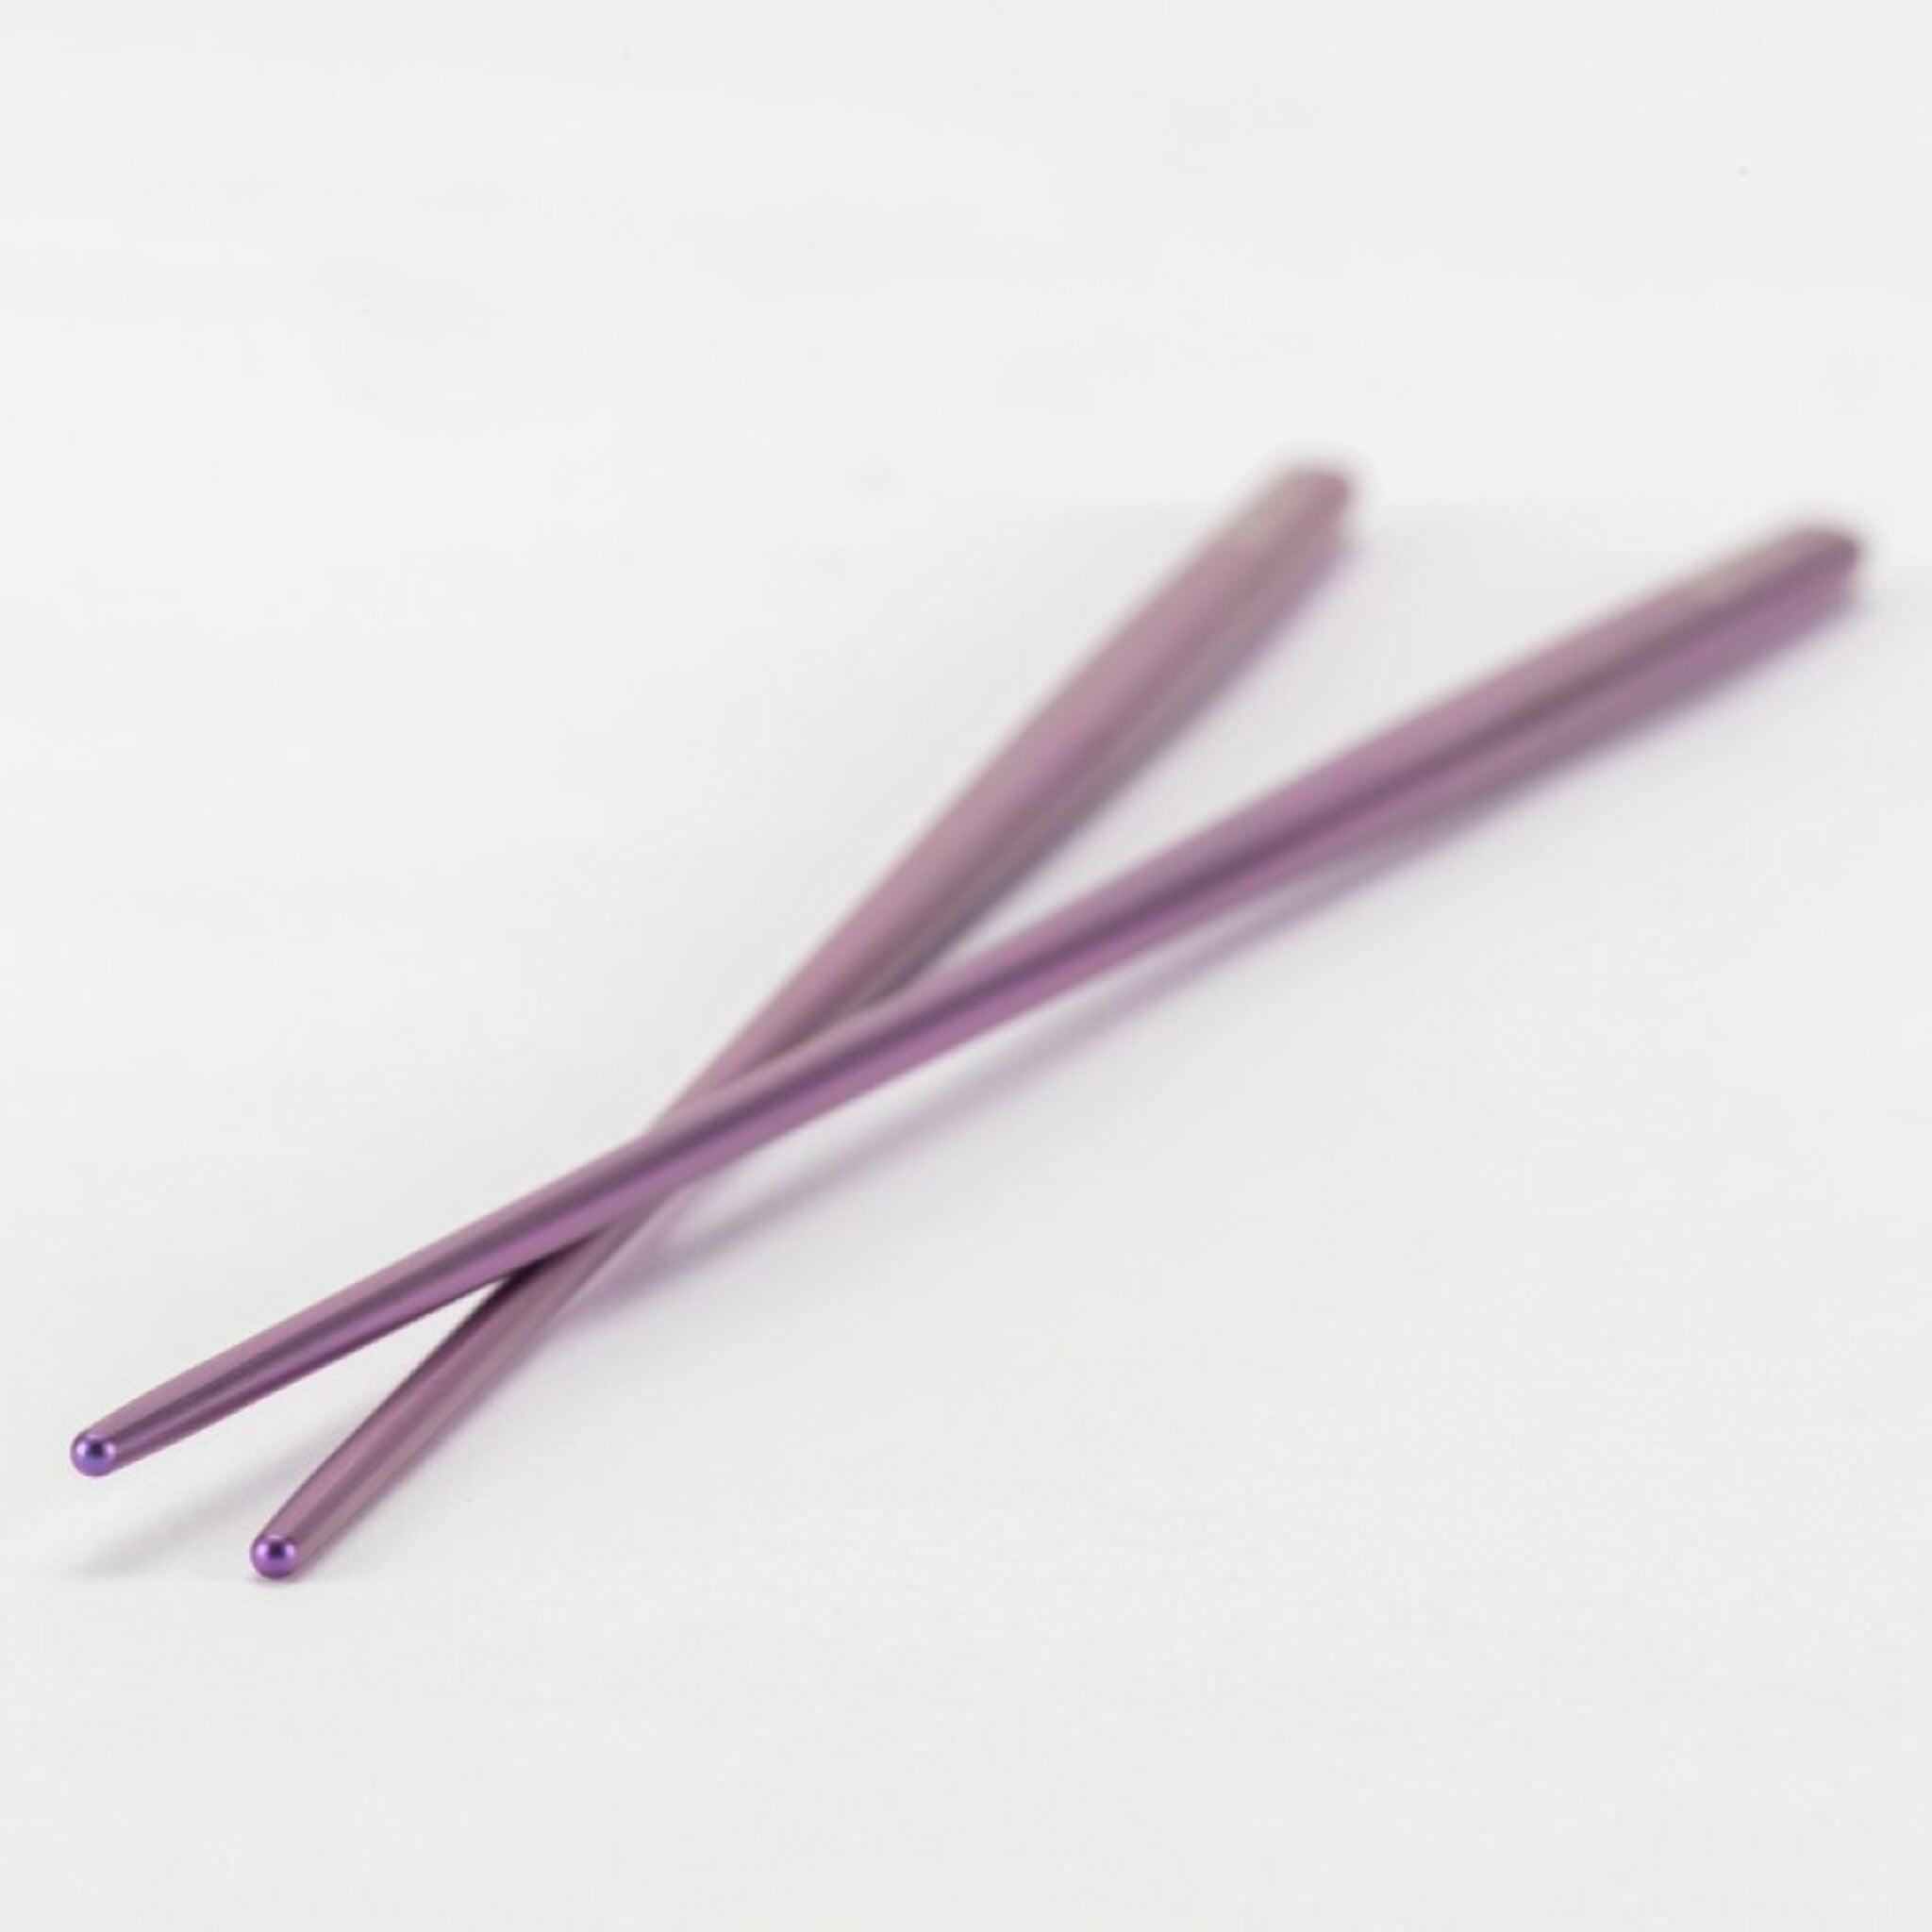 SnowPeak 鈦金屬筷 紫色 SCT-115-PL